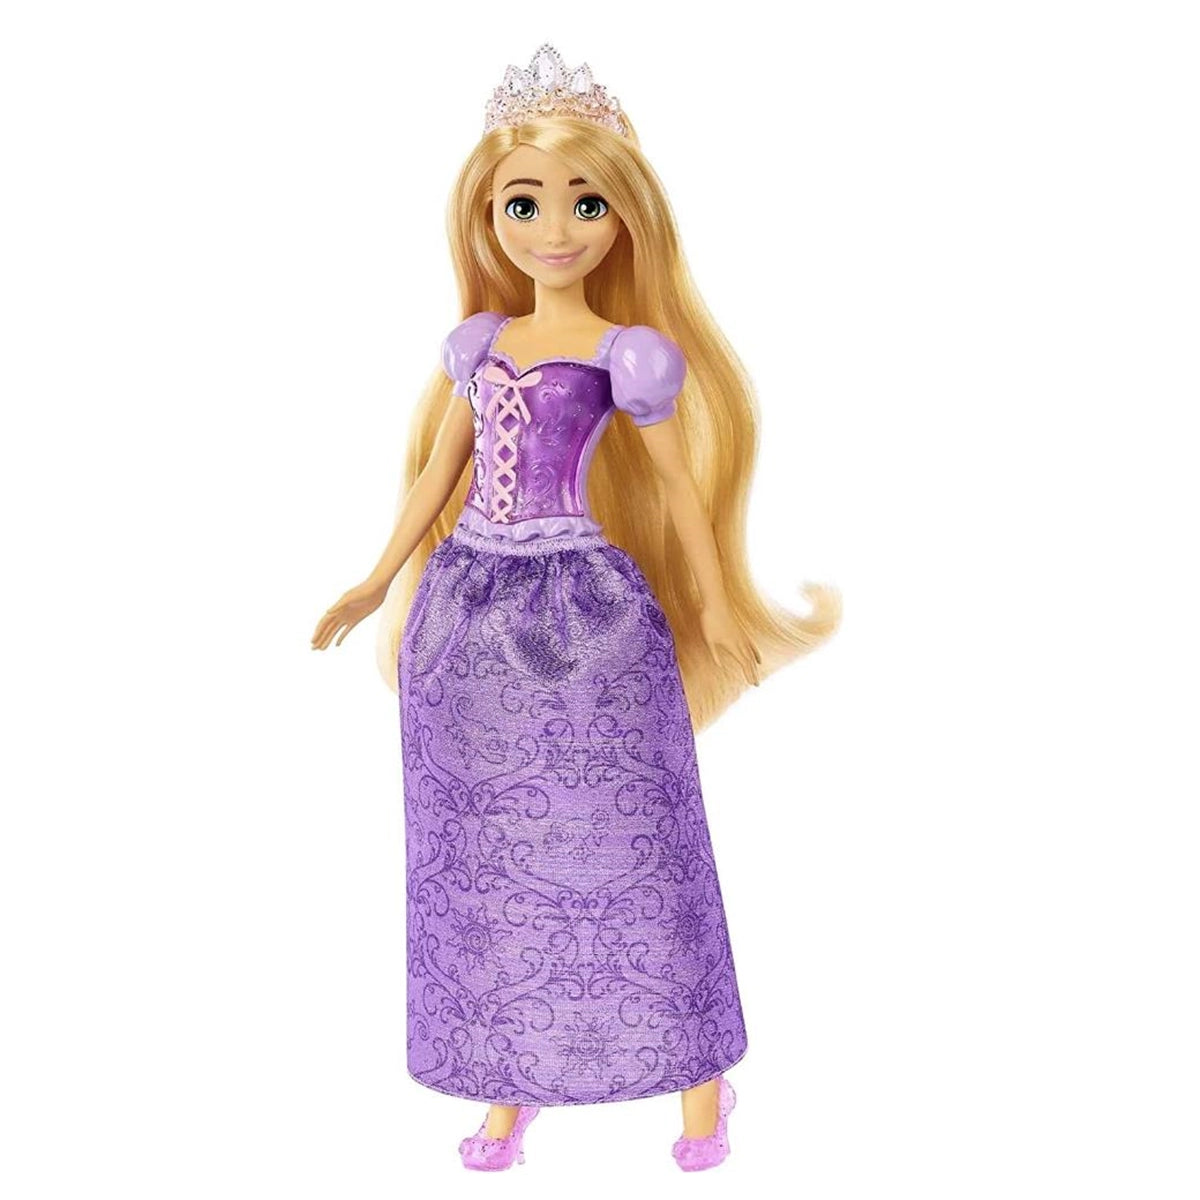 Disney Prenses Rapunzel HLW03 | Toysall